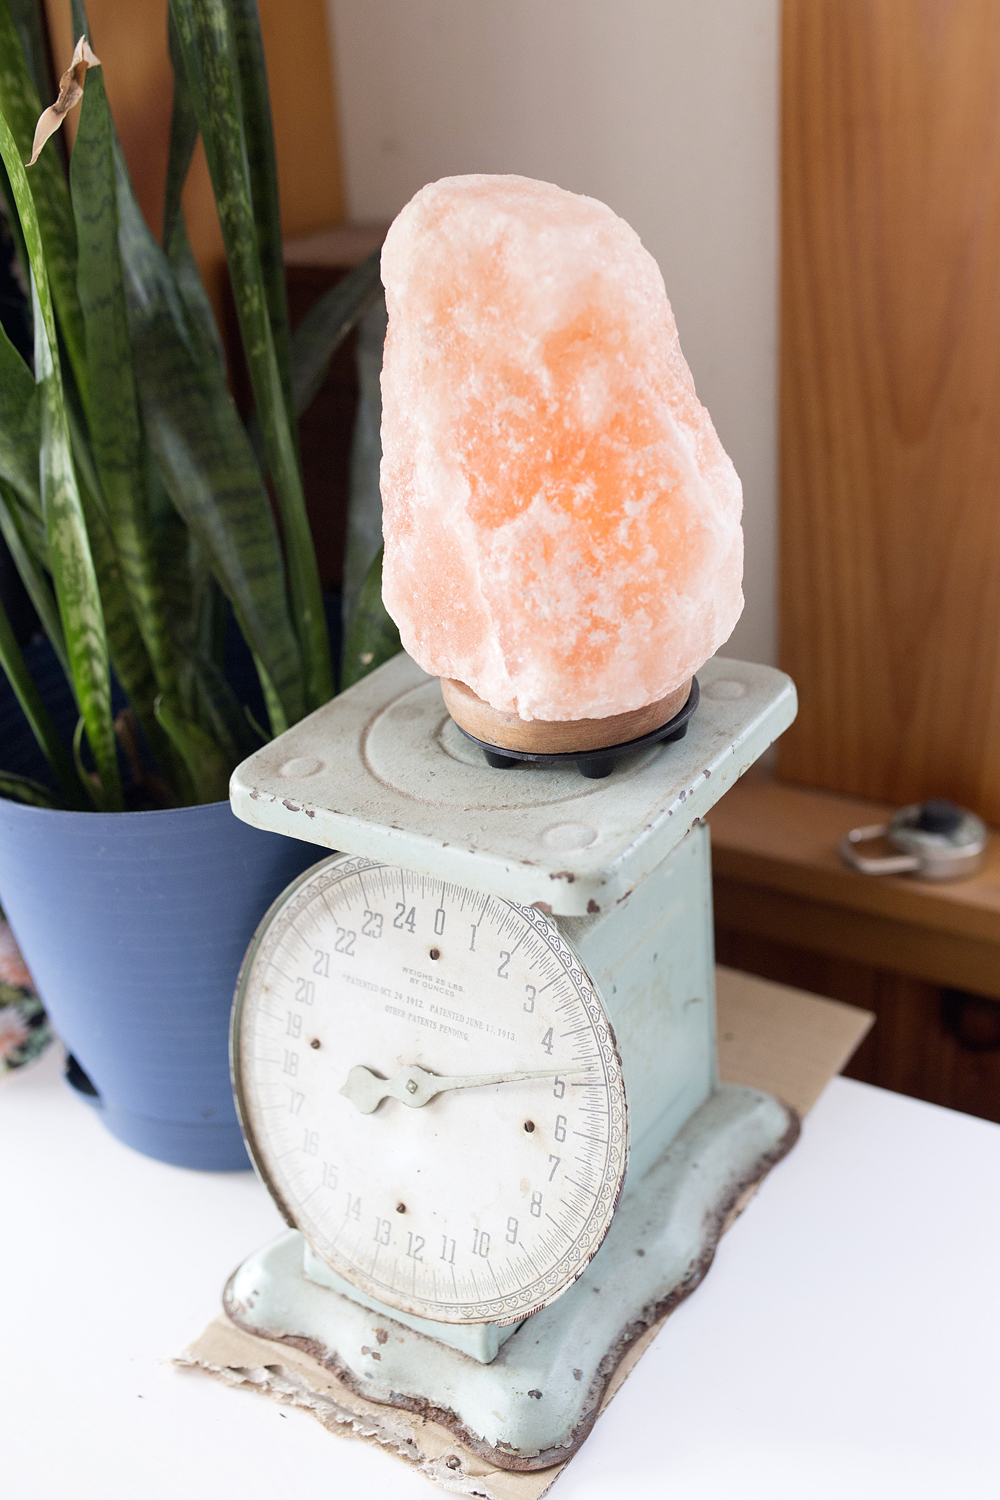 Salt lamp on top of vintage scale